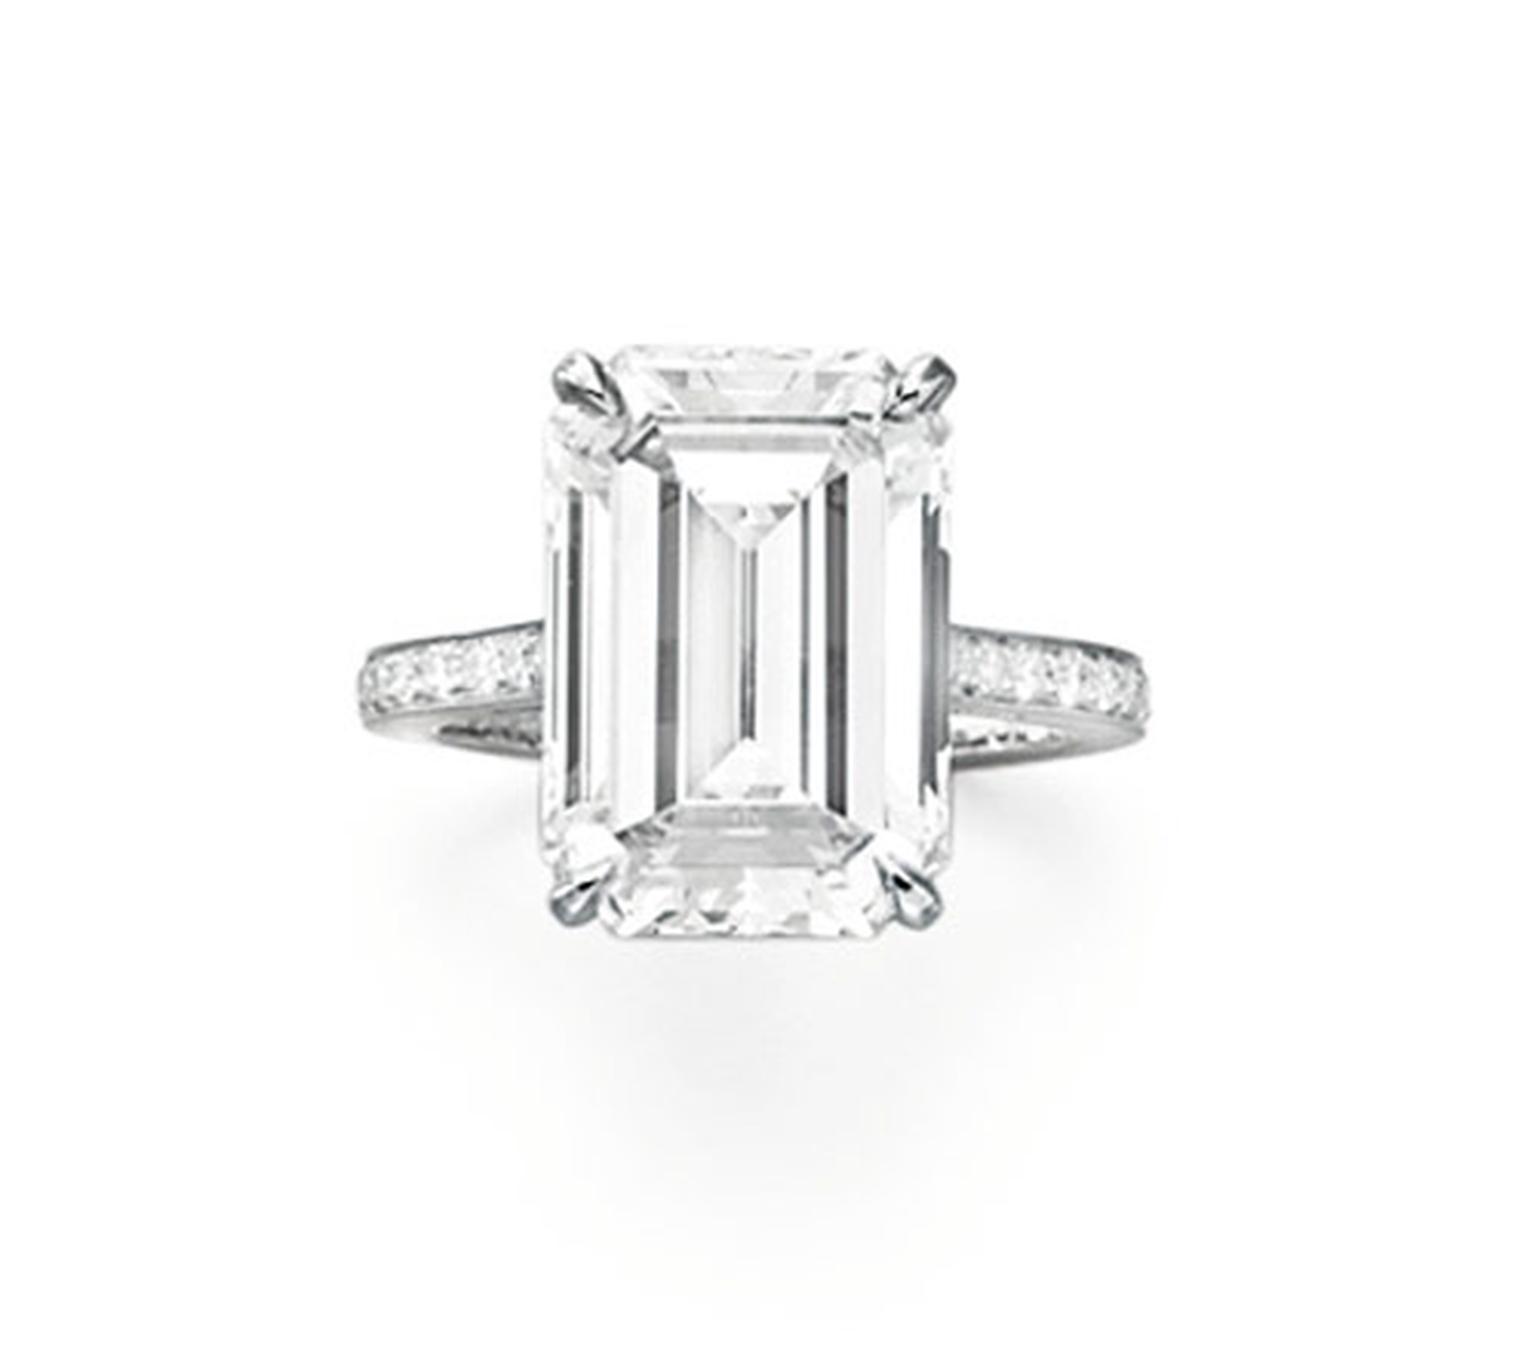 Christies-Rectangular-Cut-Diamond-Ring